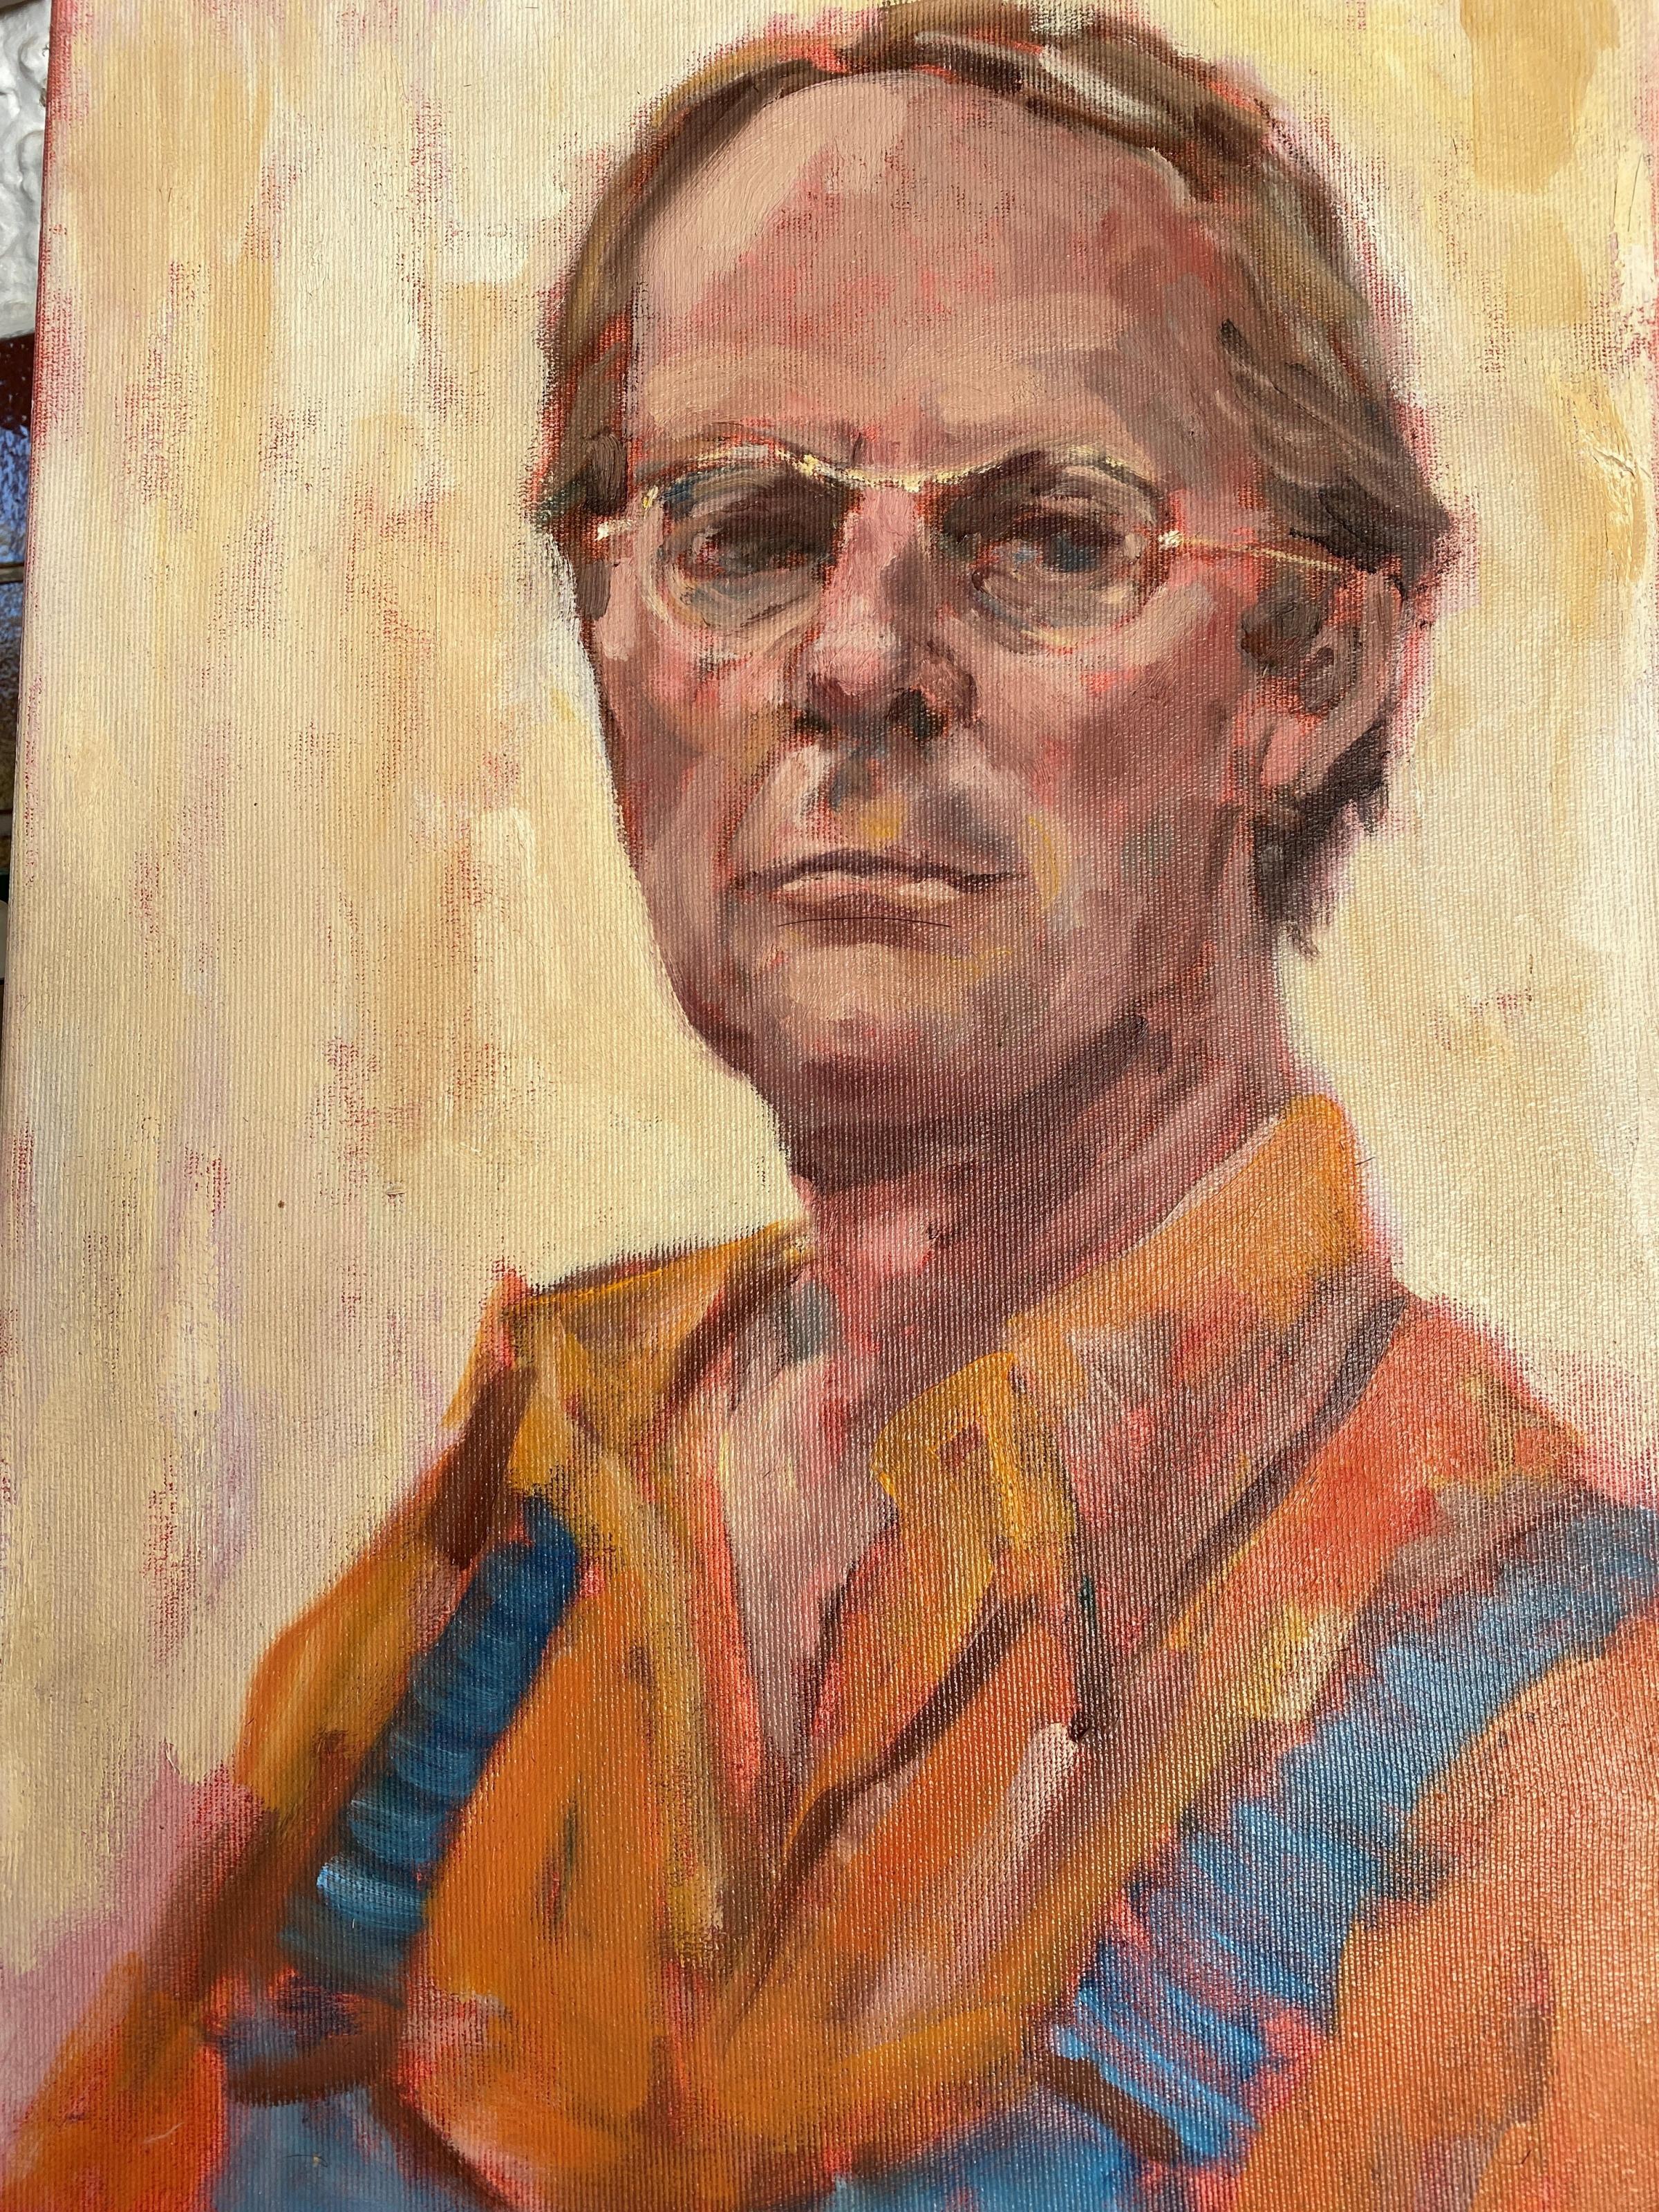 A self-portrait of John Durham